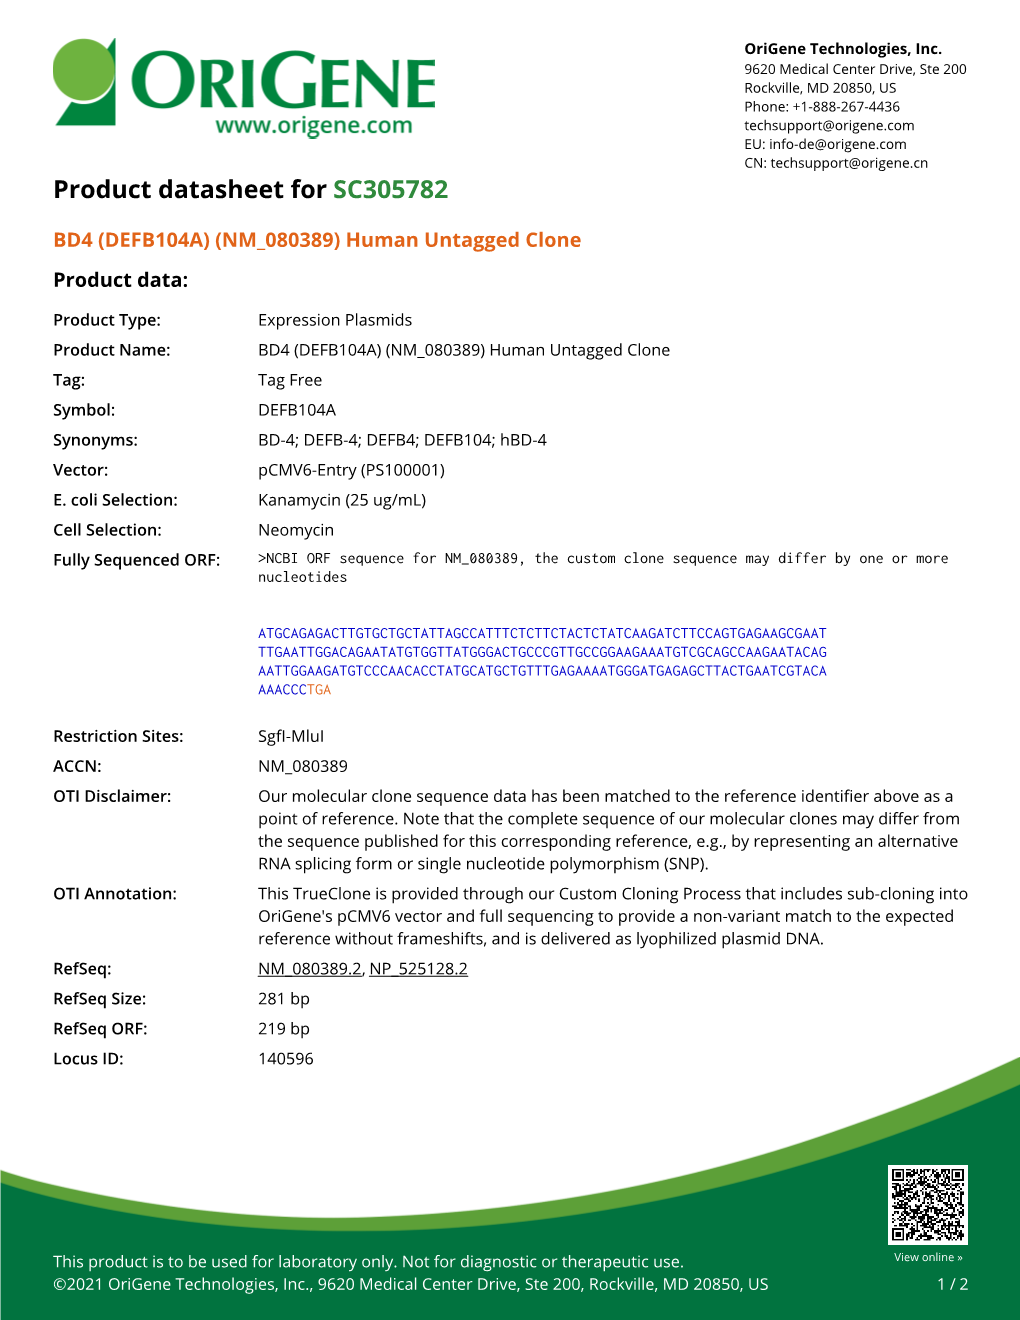 BD4 (DEFB104A) (NM 080389) Human Untagged Clone Product Data